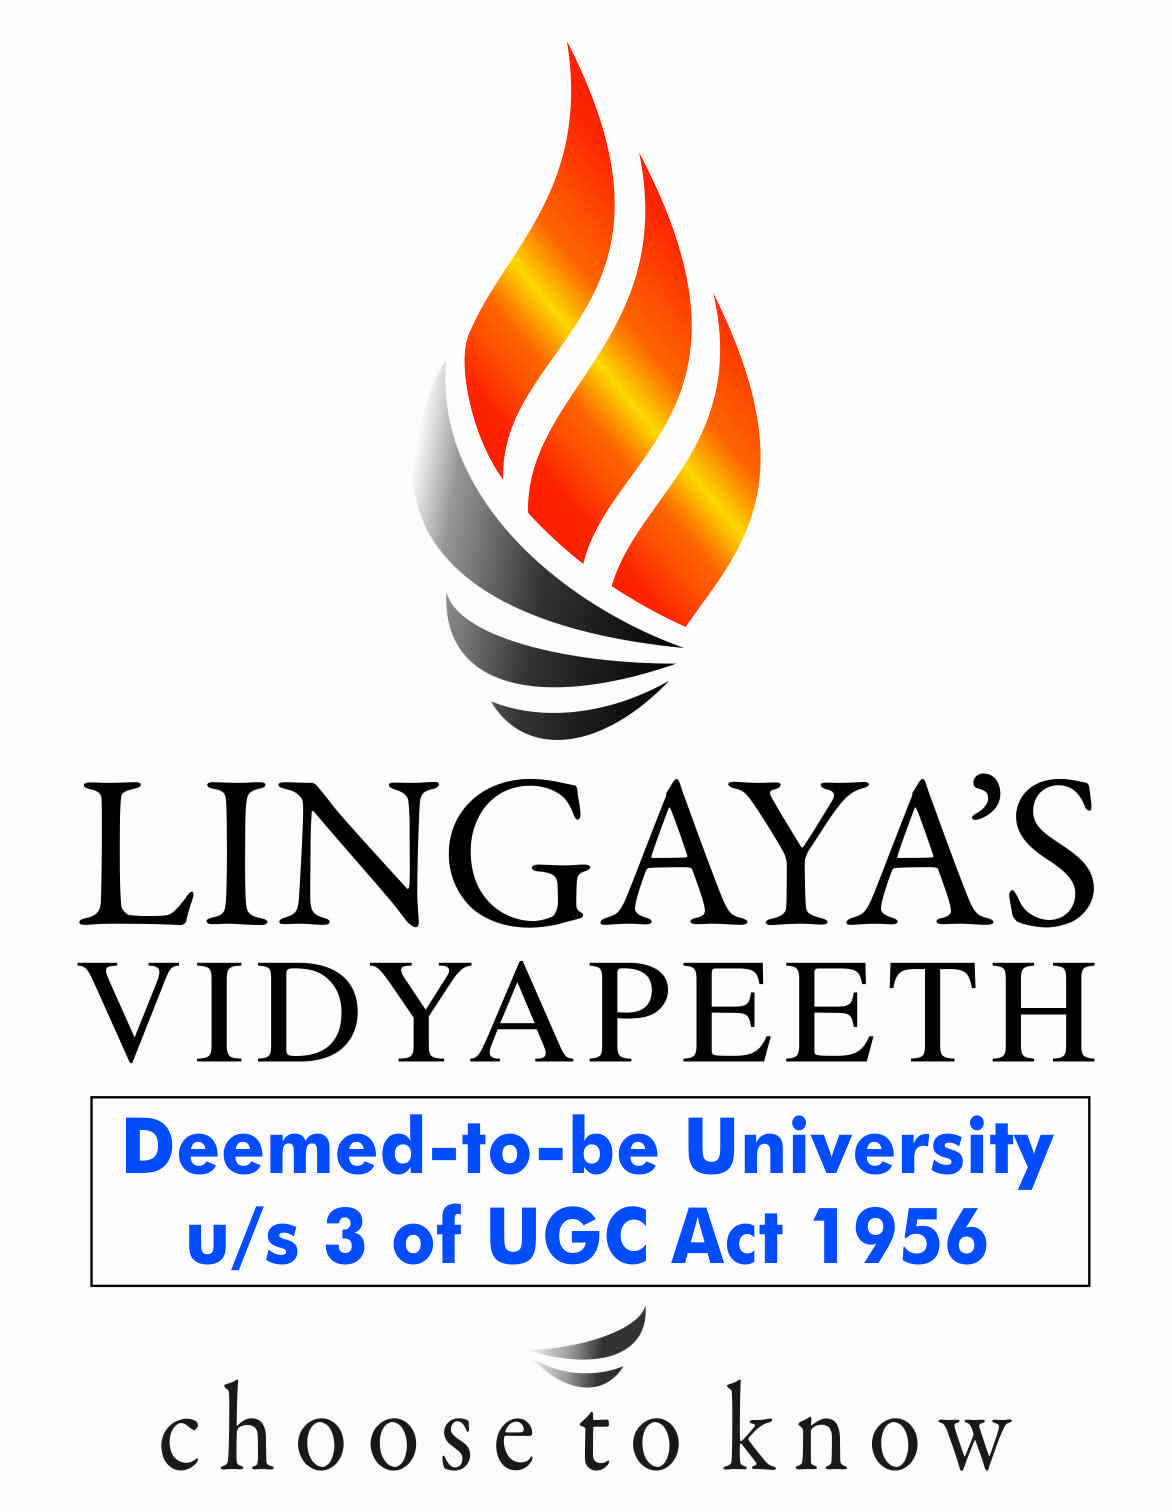 lingayas vidyapeeth logo